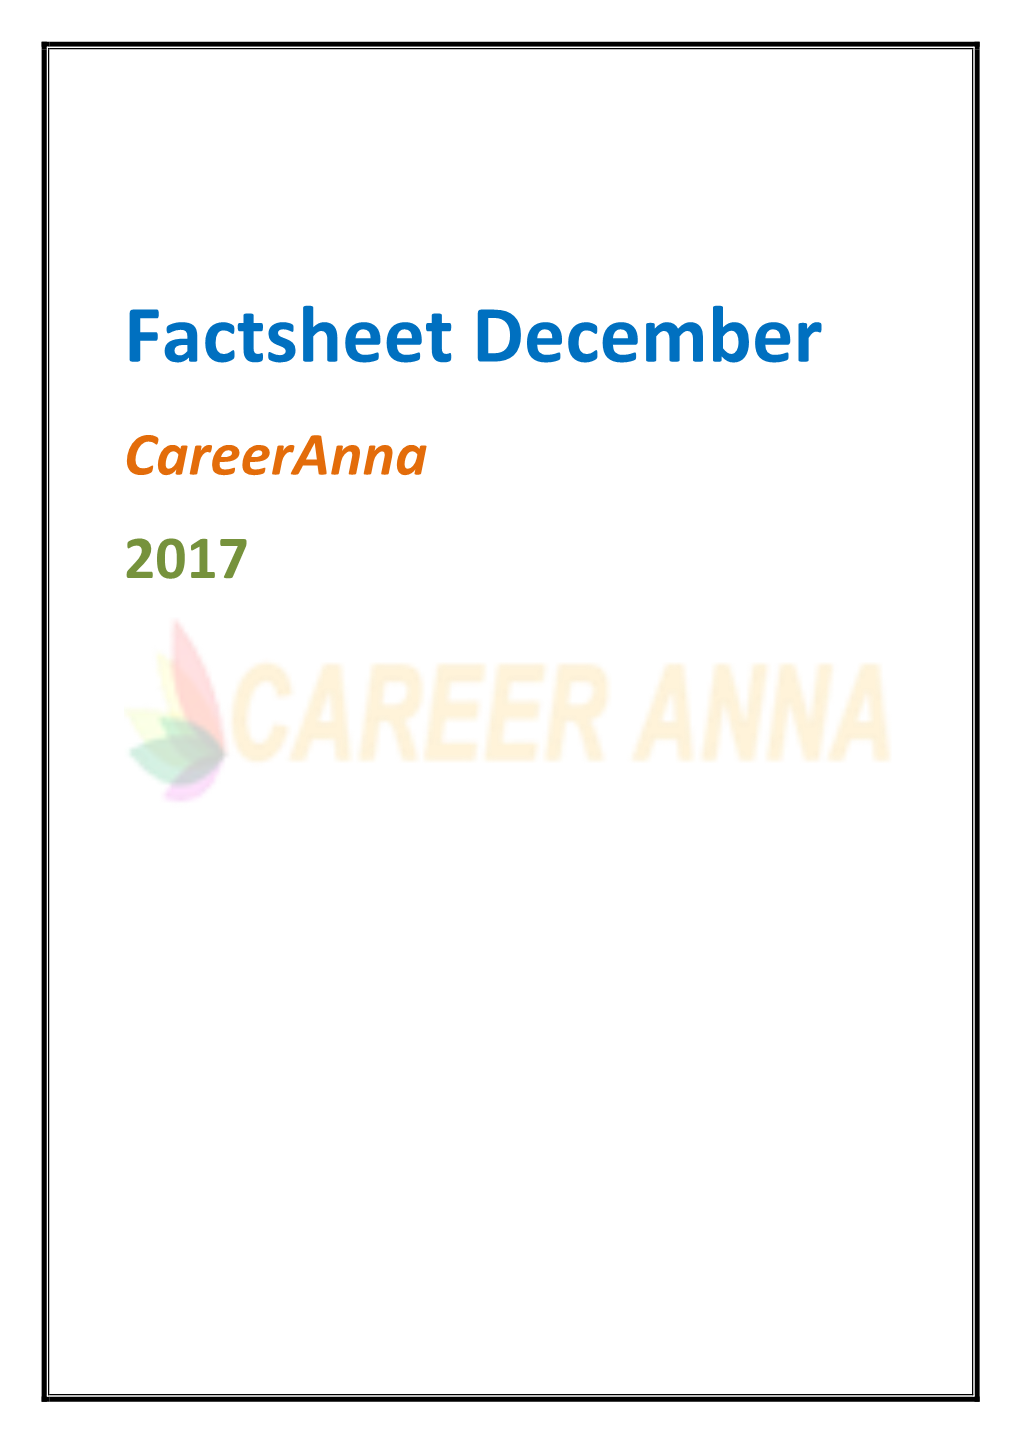 Factsheet December Careeranna 2017